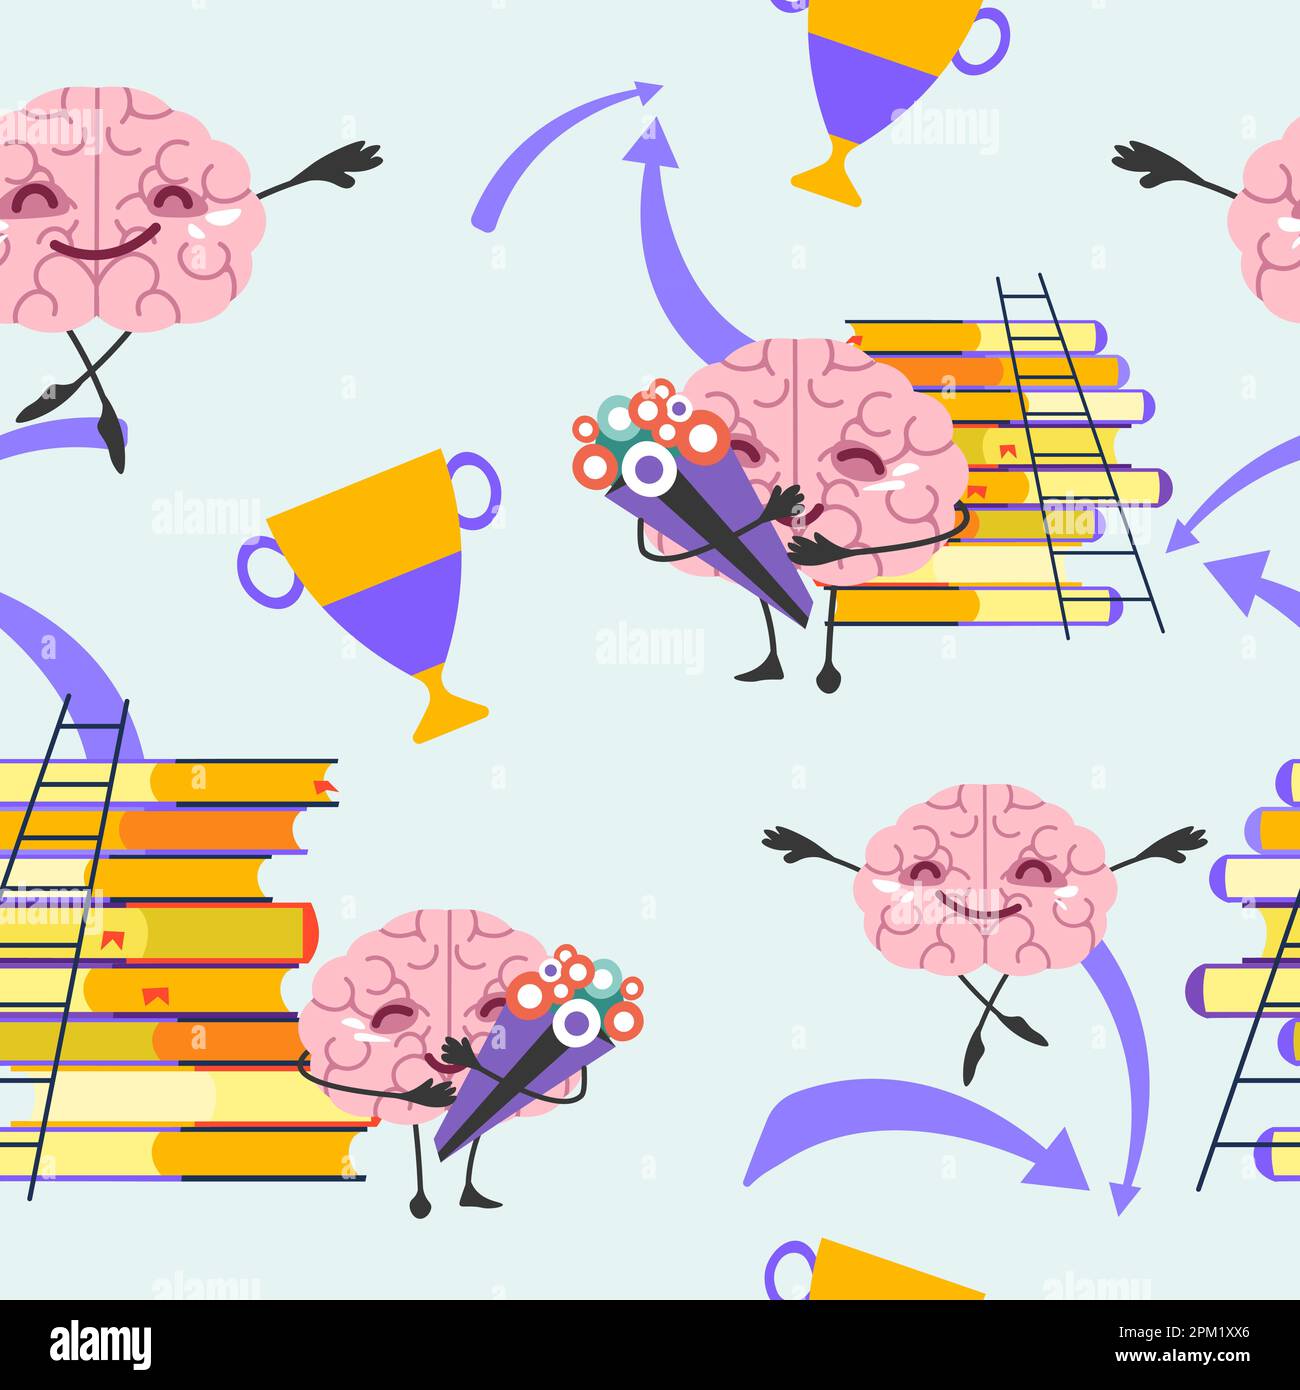 Succeesful brain character reaching goals tasks Stock Vector